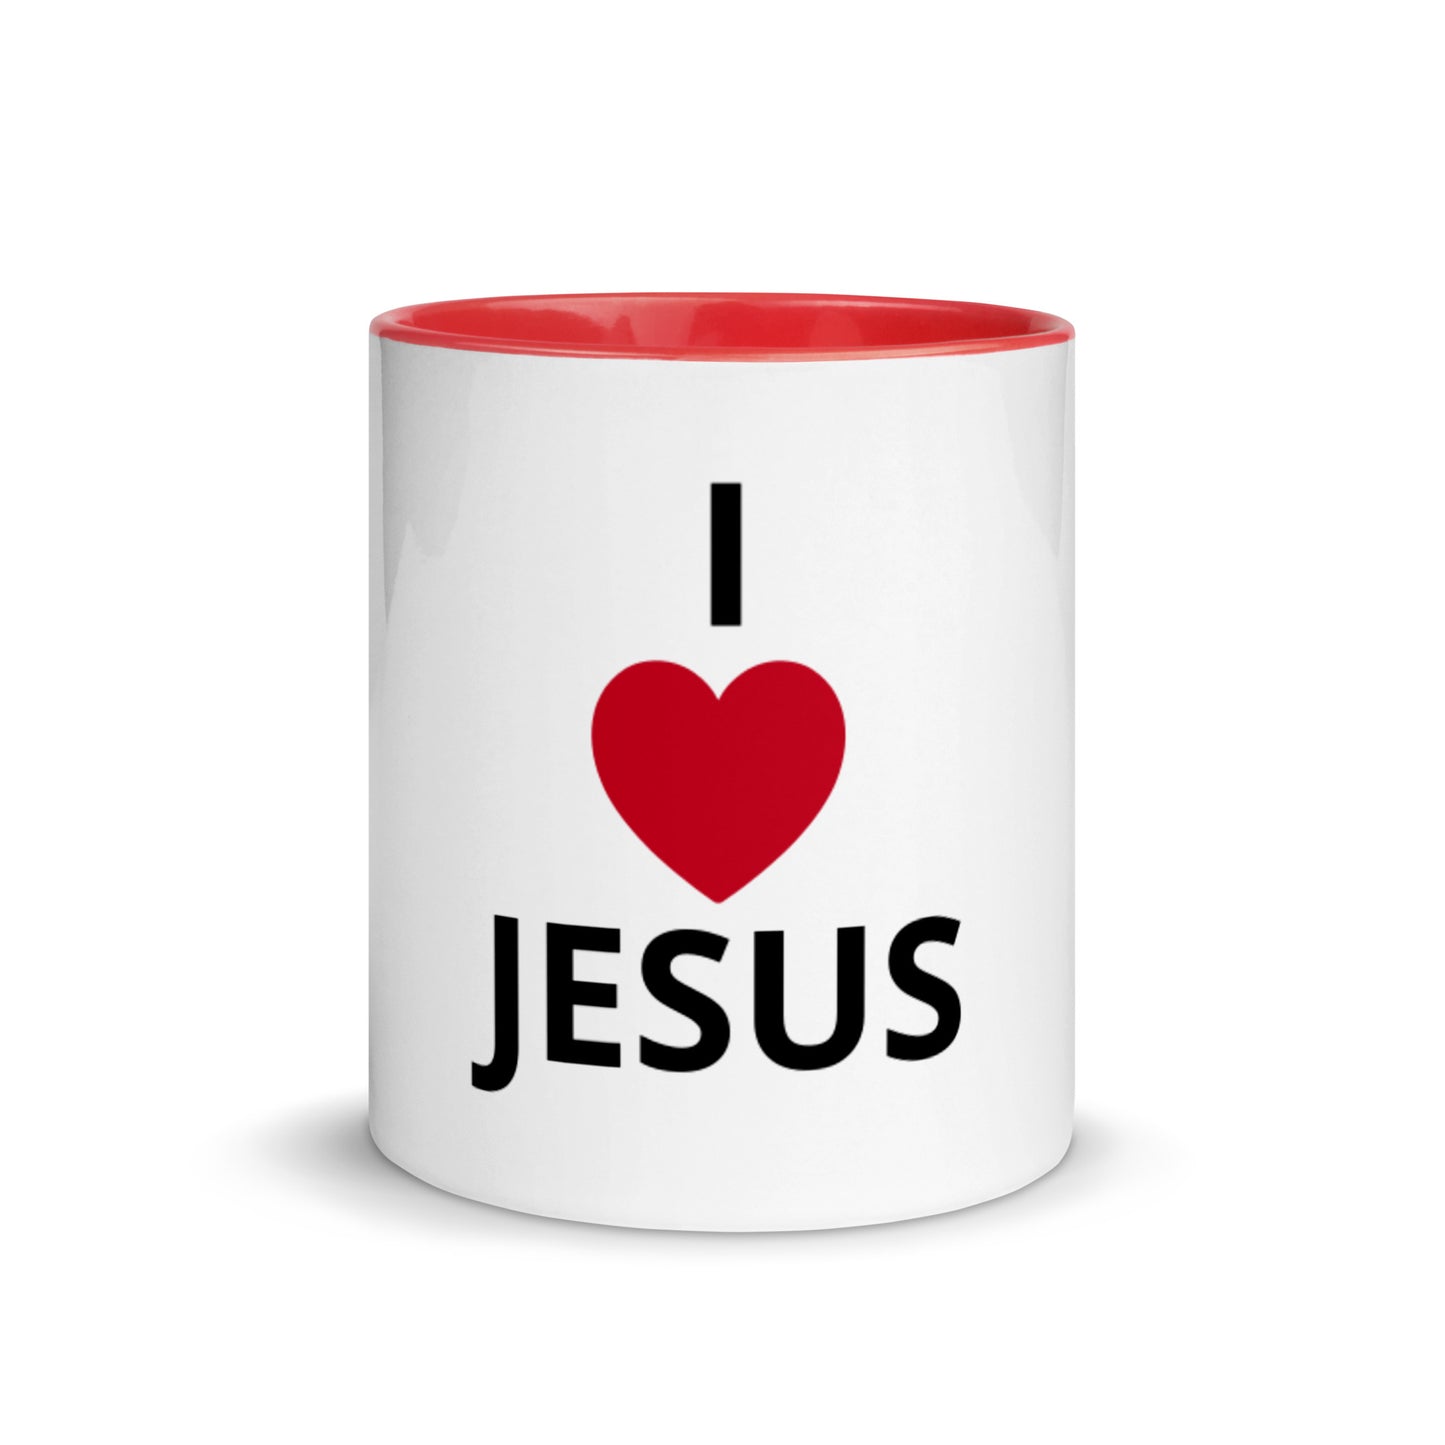 I Love Jesus White Ceramic Mug with Color Inside